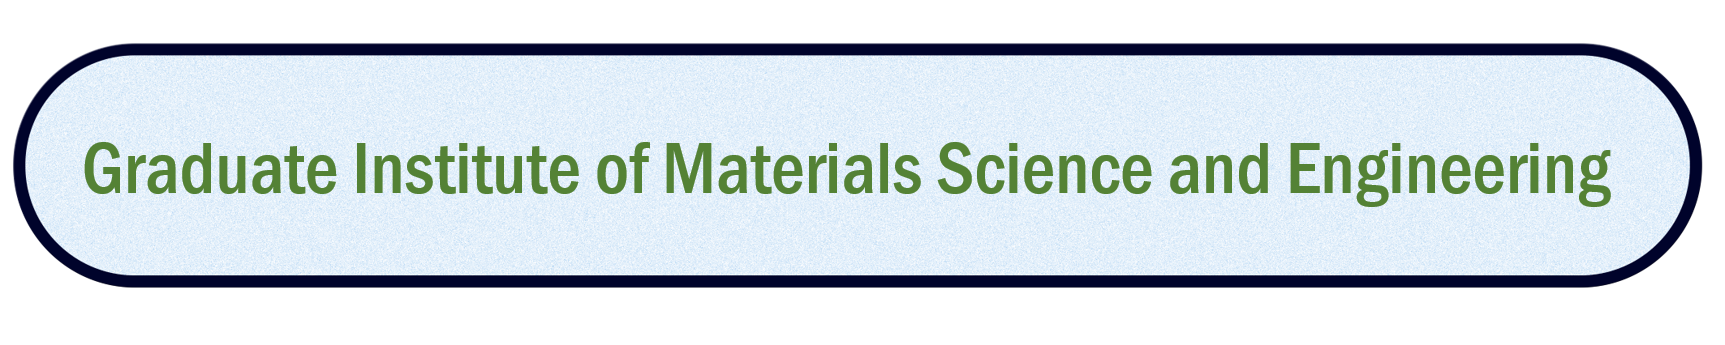 Graduate Institute of Materials Science and Engineering